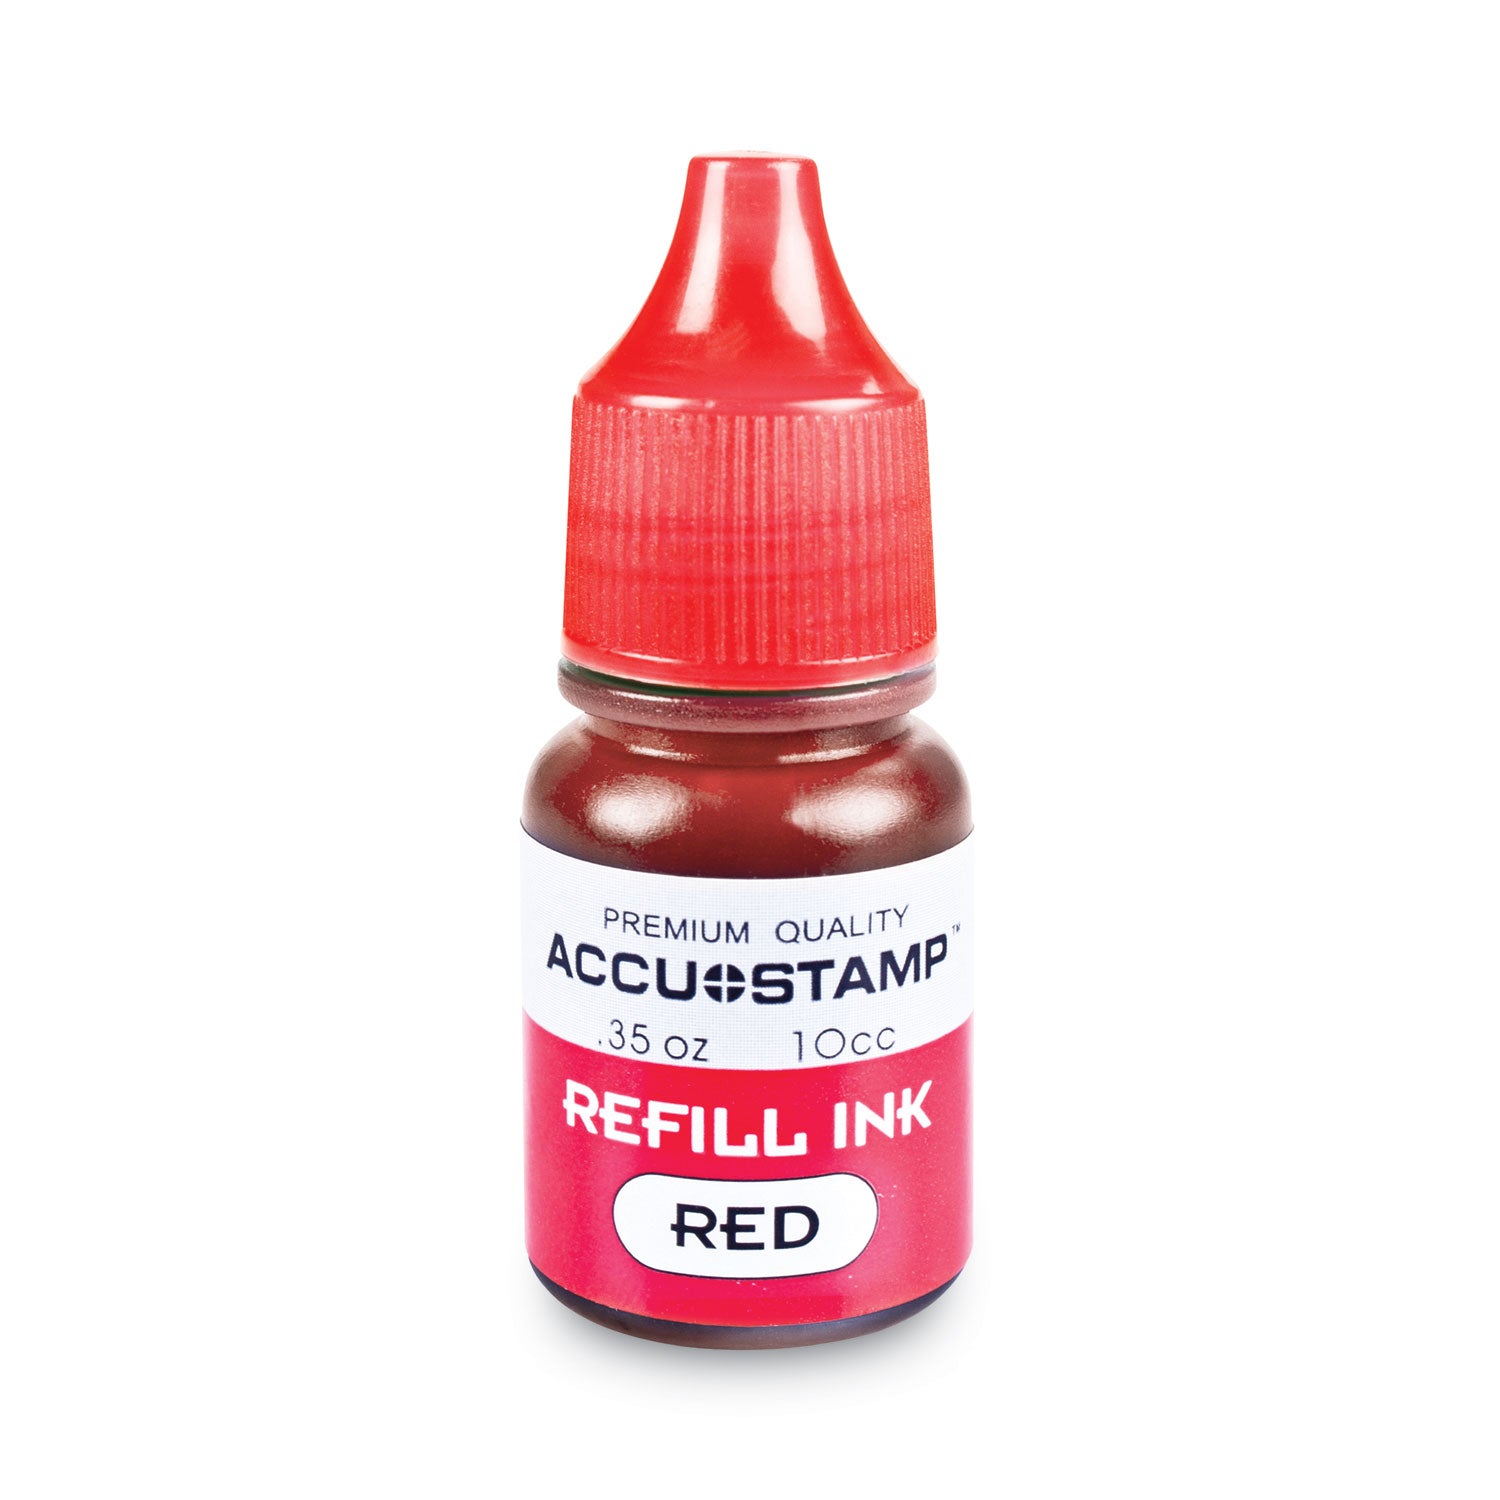 ACCU-STAMP Gel Ink Refill, 0.35 oz Bottle, Red - 